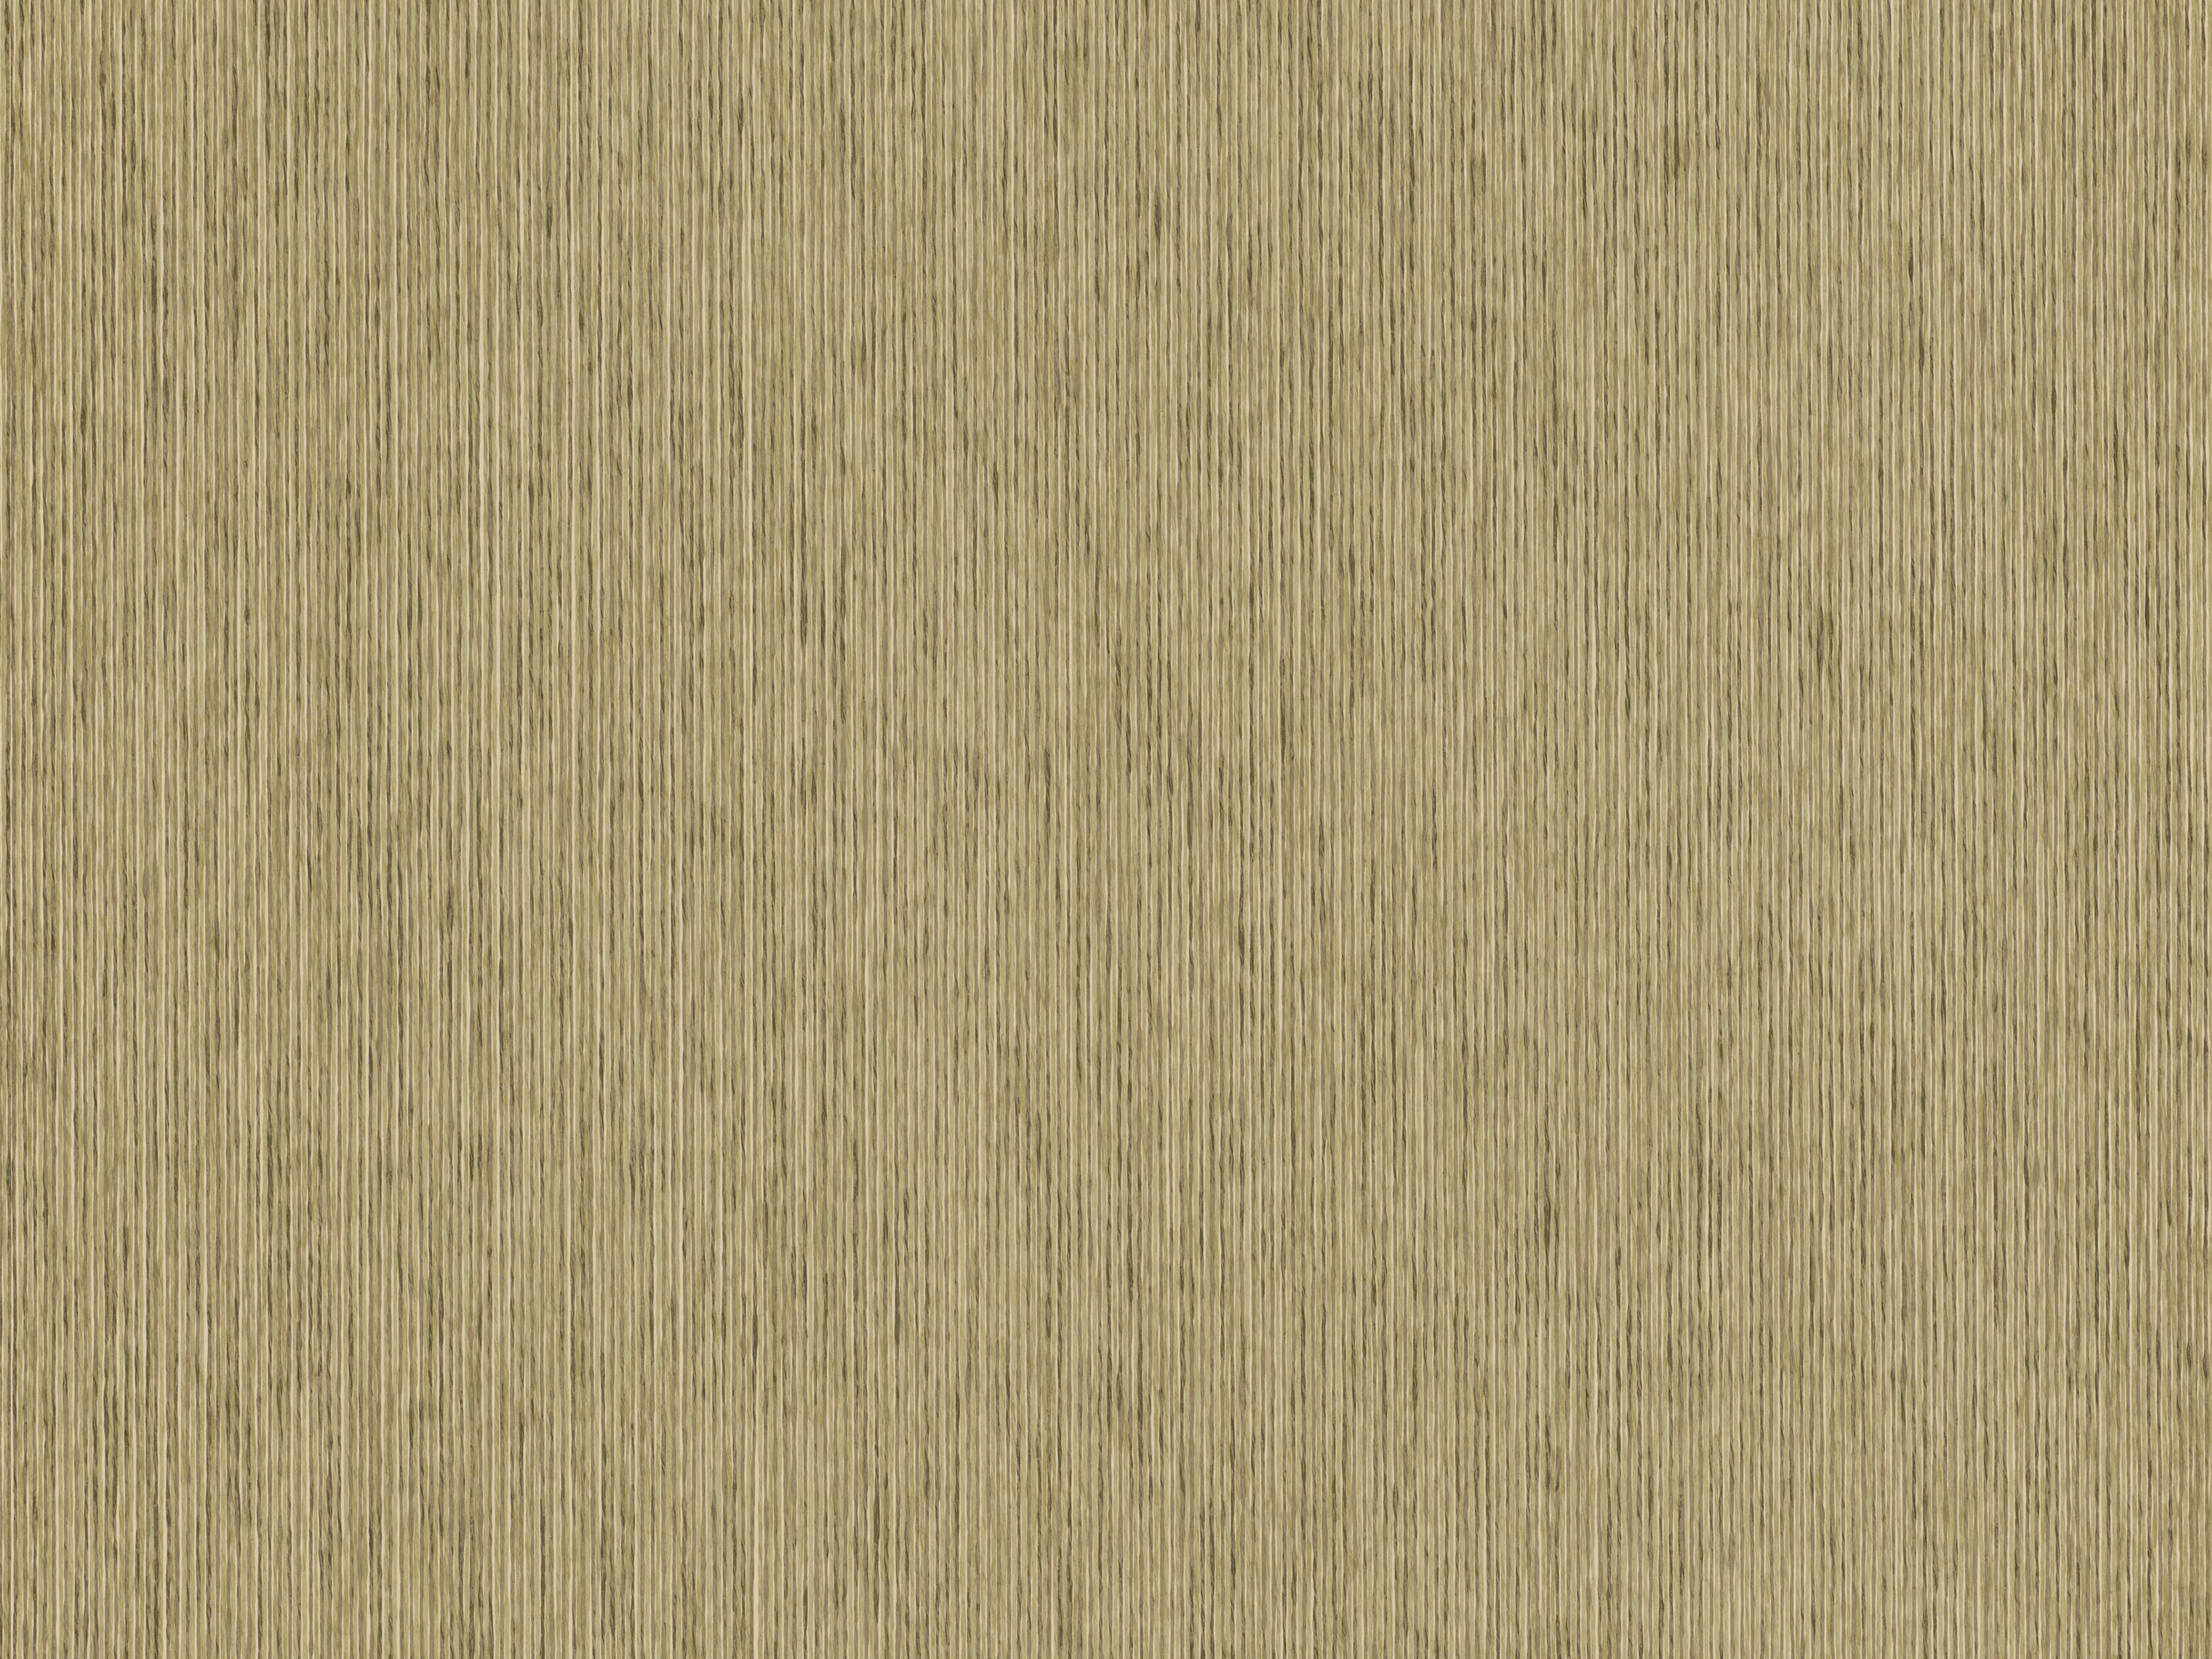 Non-Woven Wallpaper Wood Rattan beige brown 10209-14